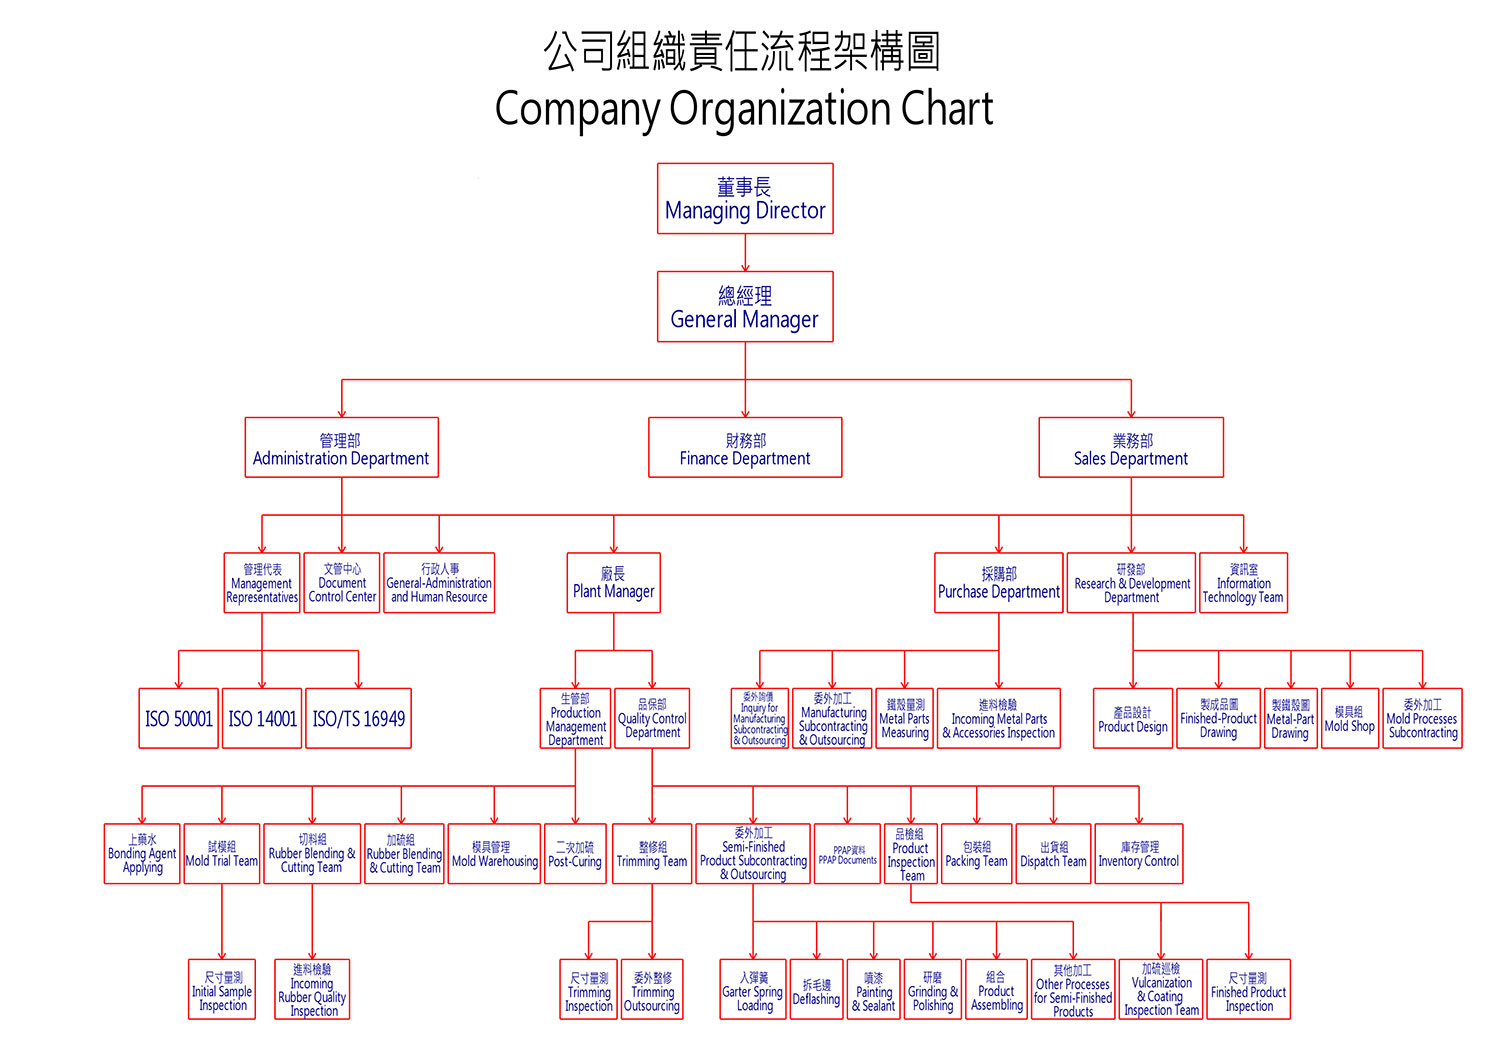 ASA - Company organization chart